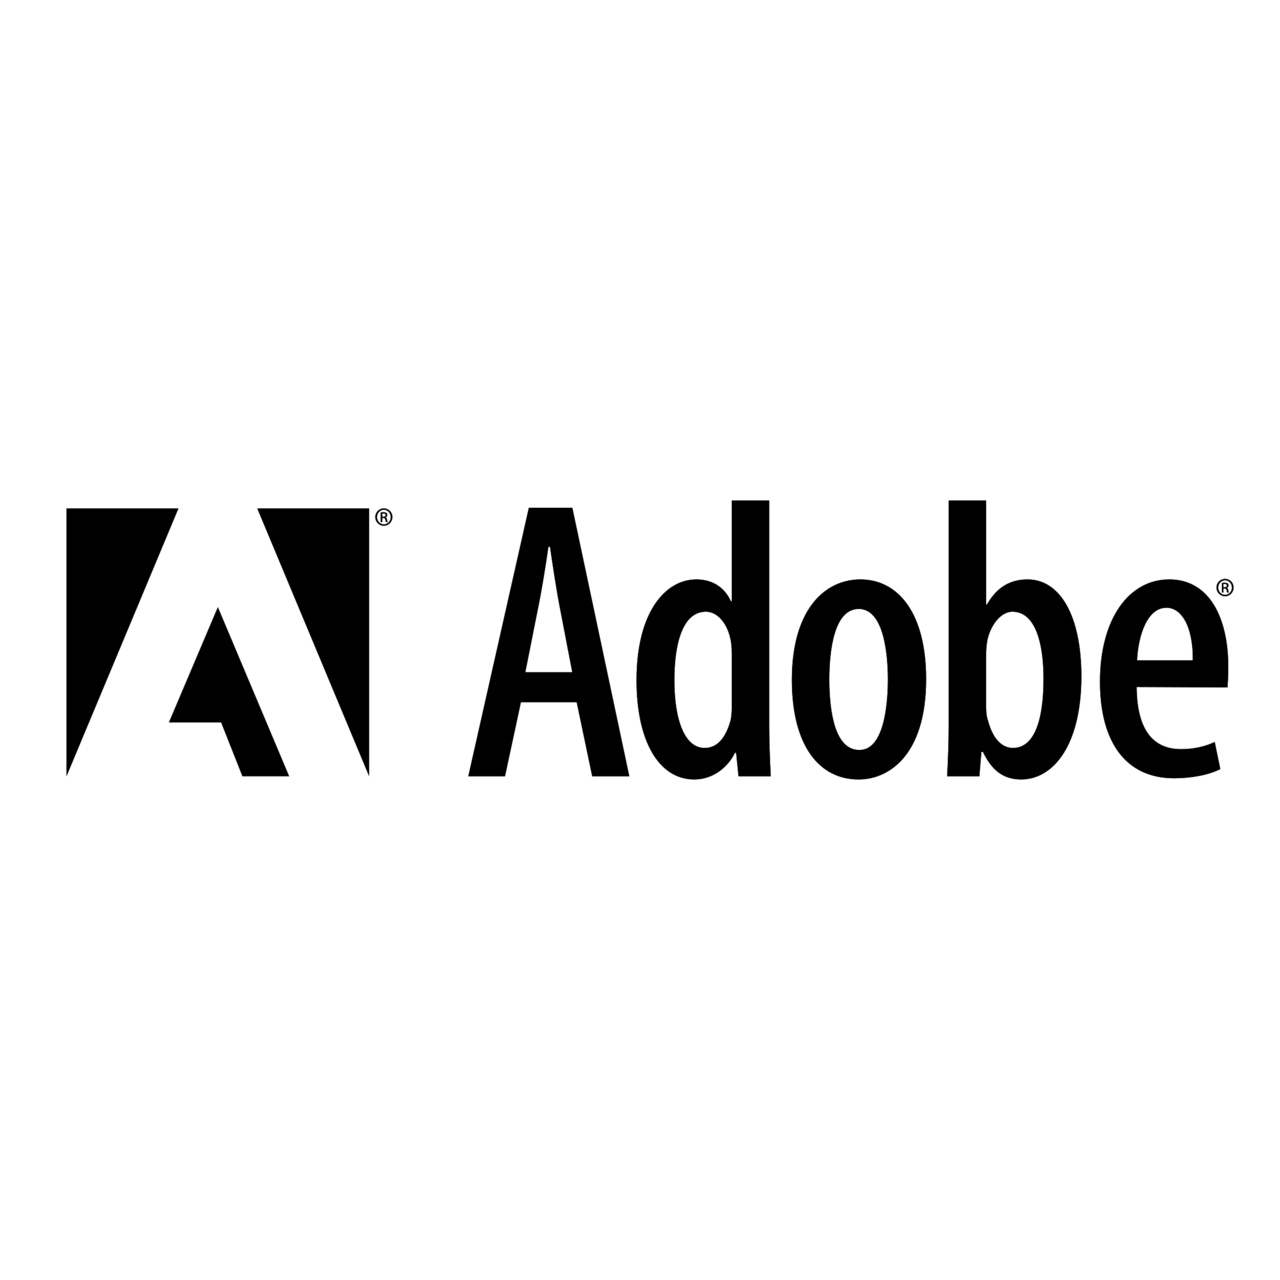 adobe-logo-black-and-white-3